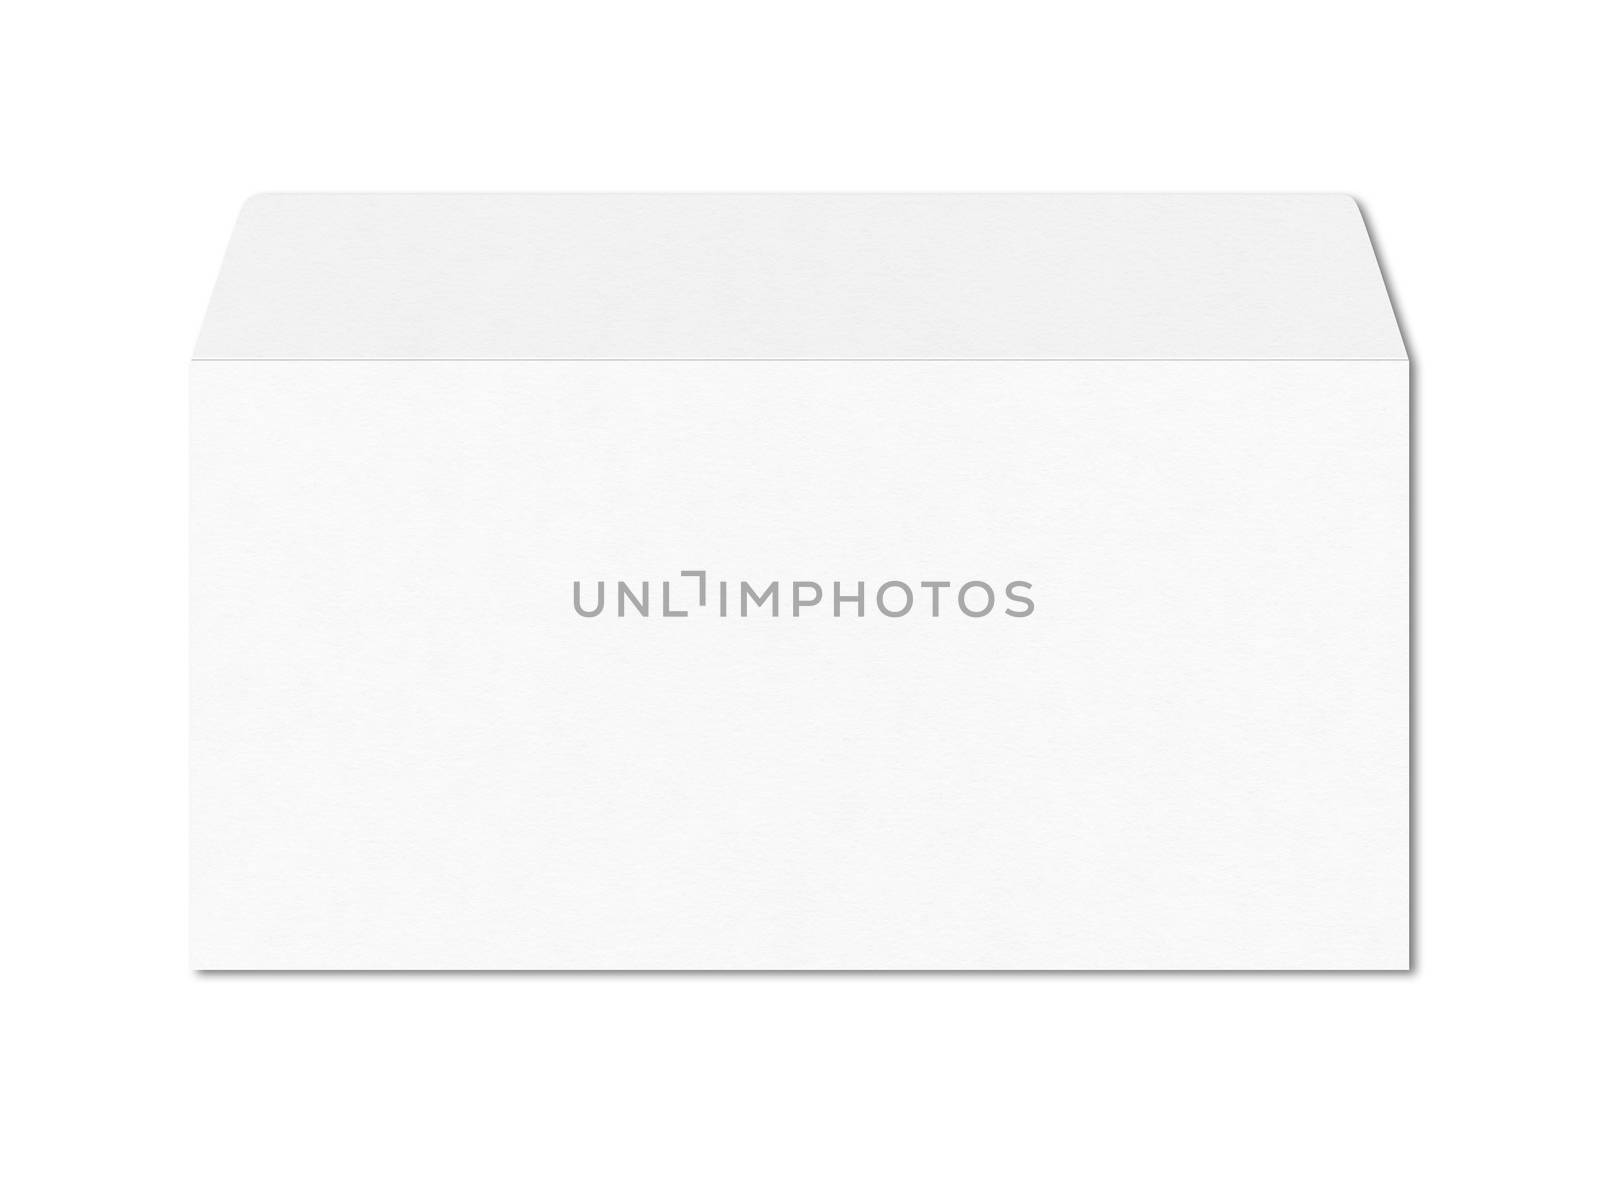 Blank enveloppe mockup template isolated on white background